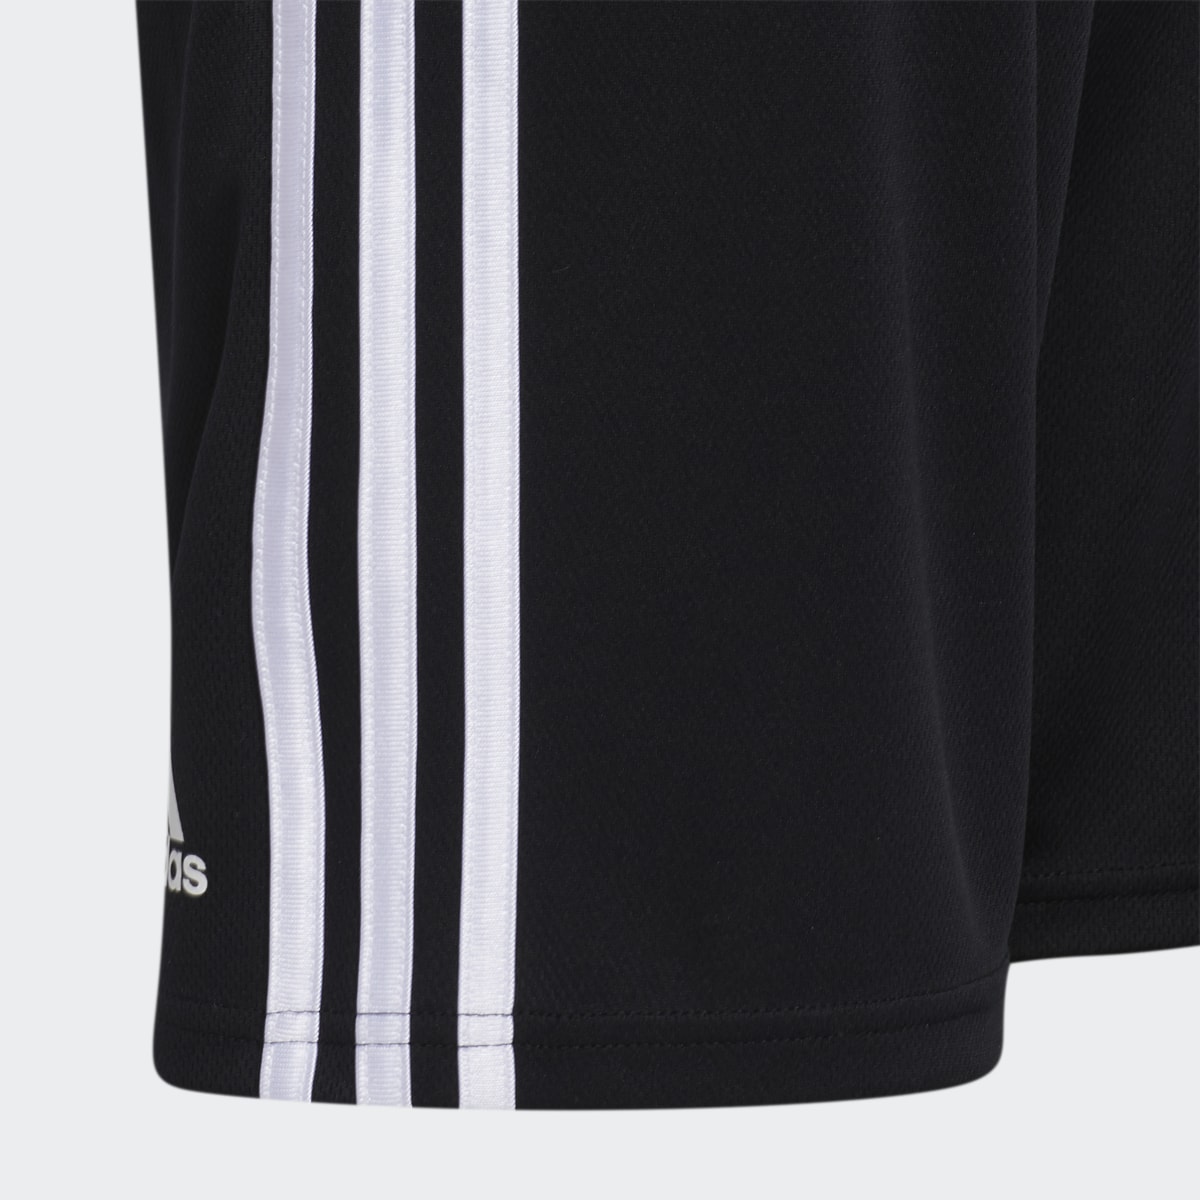 Adidas Classic 3-Stripes Shorts. 4